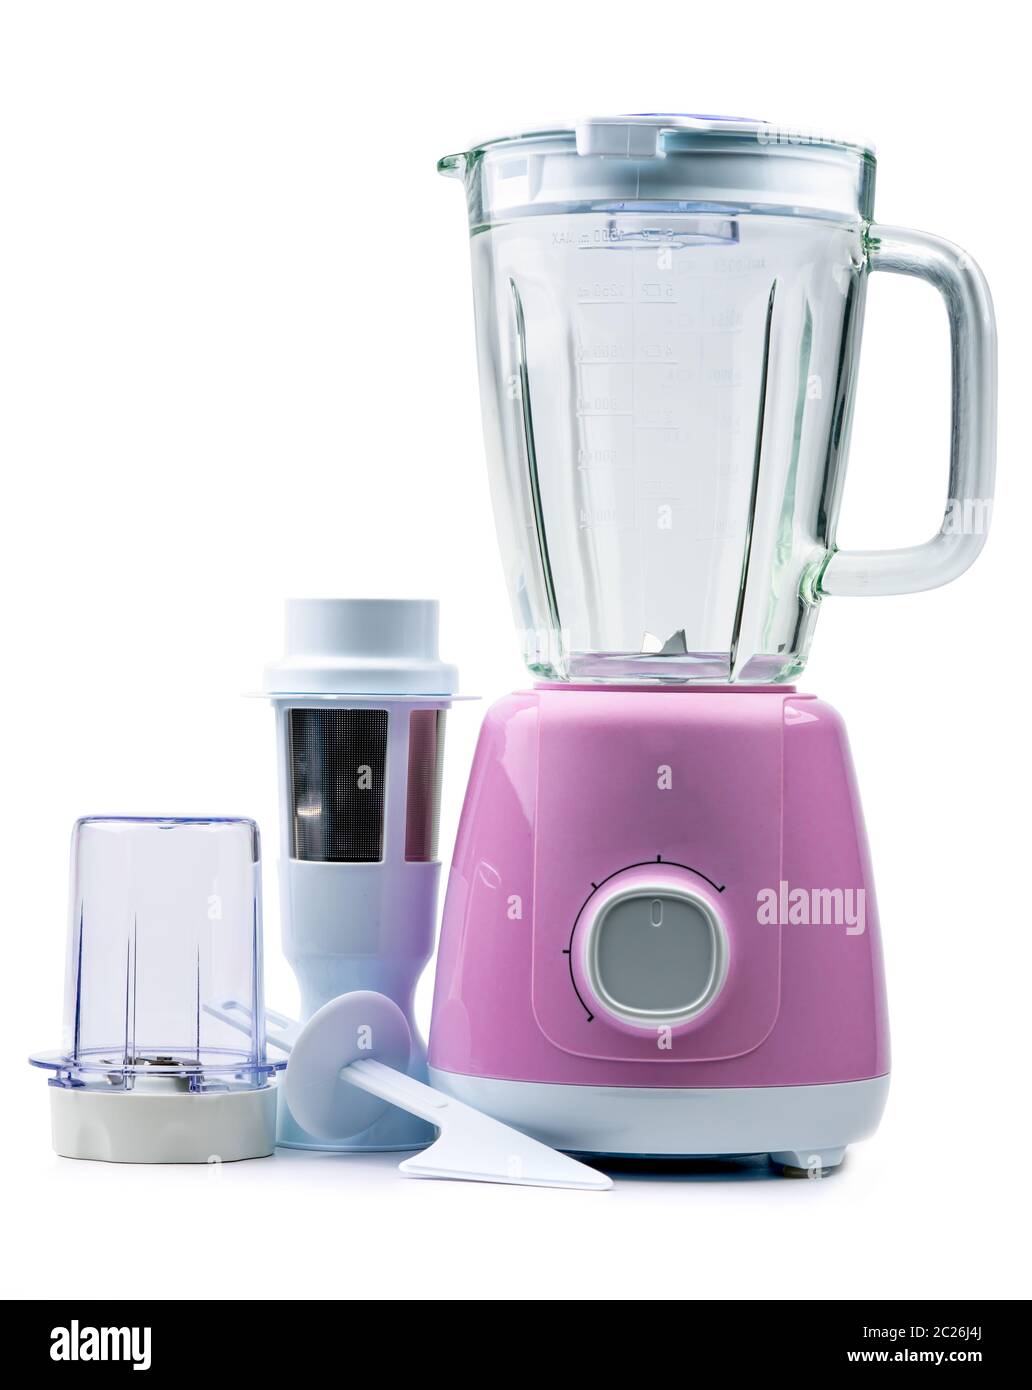 https://c8.alamy.com/comp/2C26J4J/empty-pastel-purple-electric-blender-with-filter-toughened-glass-jug-dry-grinder-and-speed-selector-isolated-on-white-background-blender-and-grinde-2C26J4J.jpg